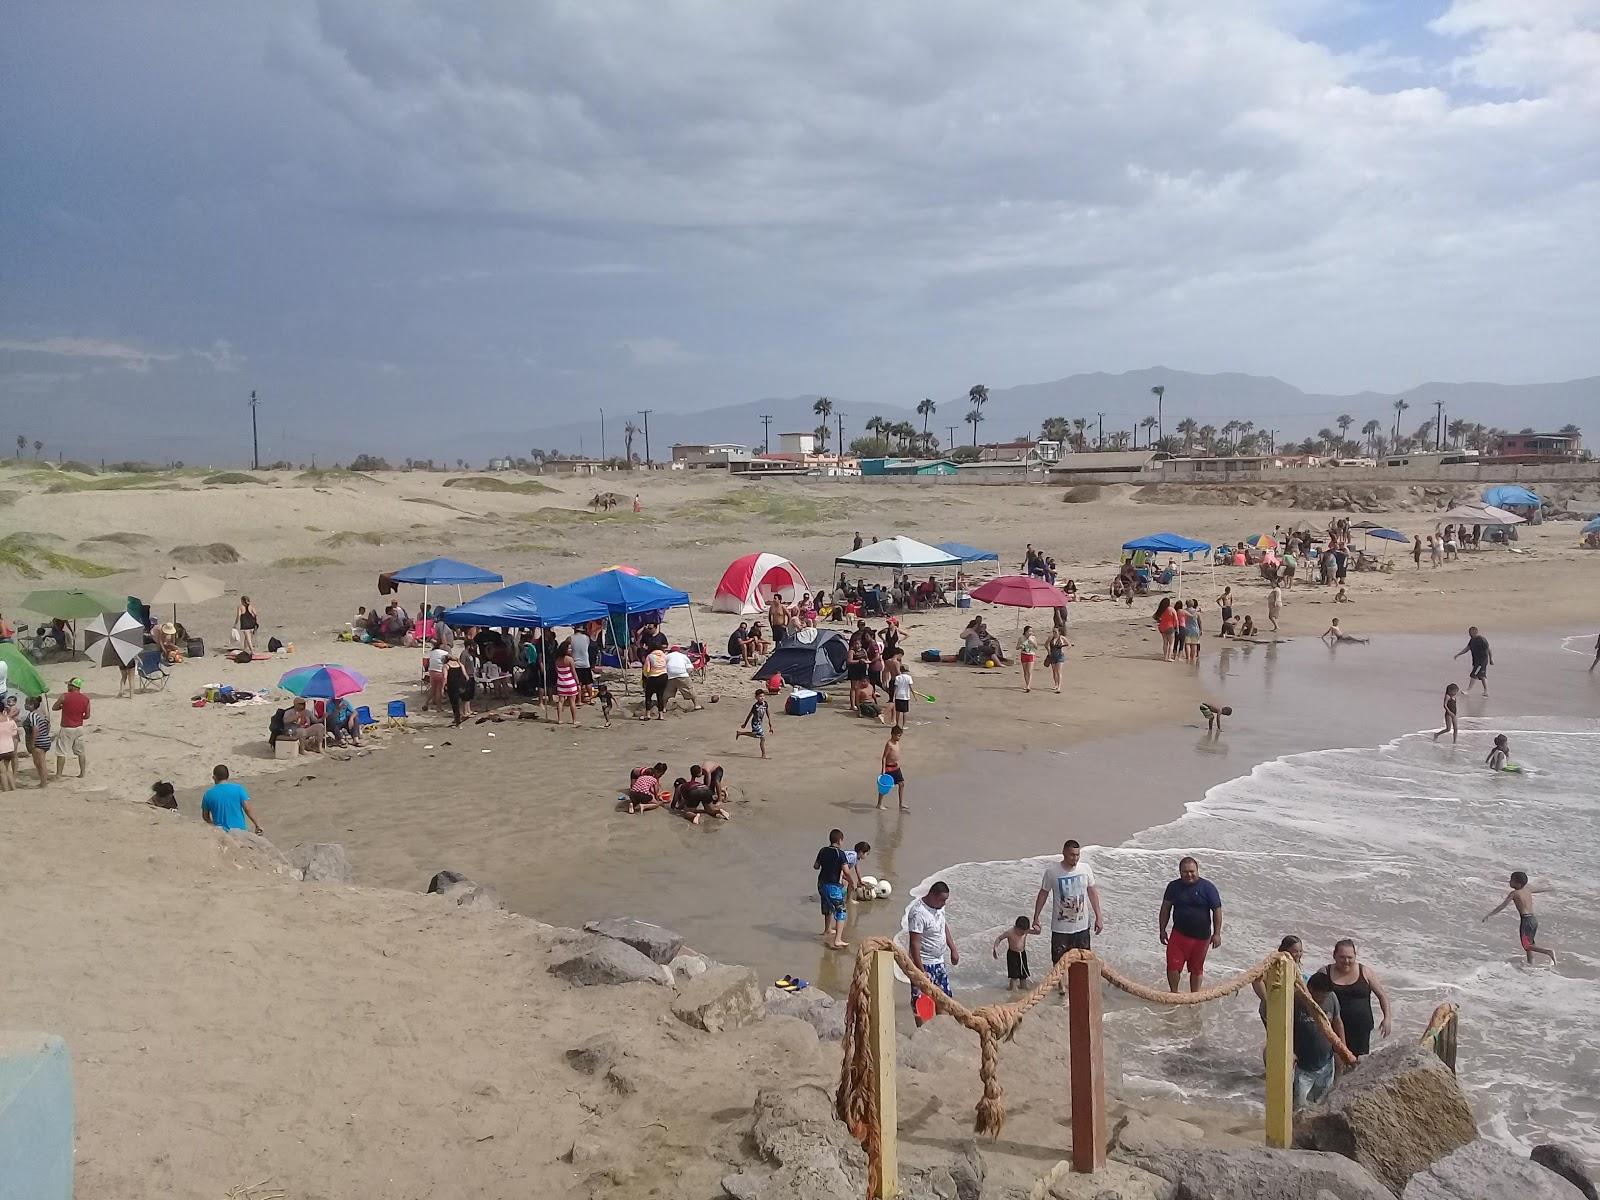 Foto av Cactus beach med hög nivå av renlighet